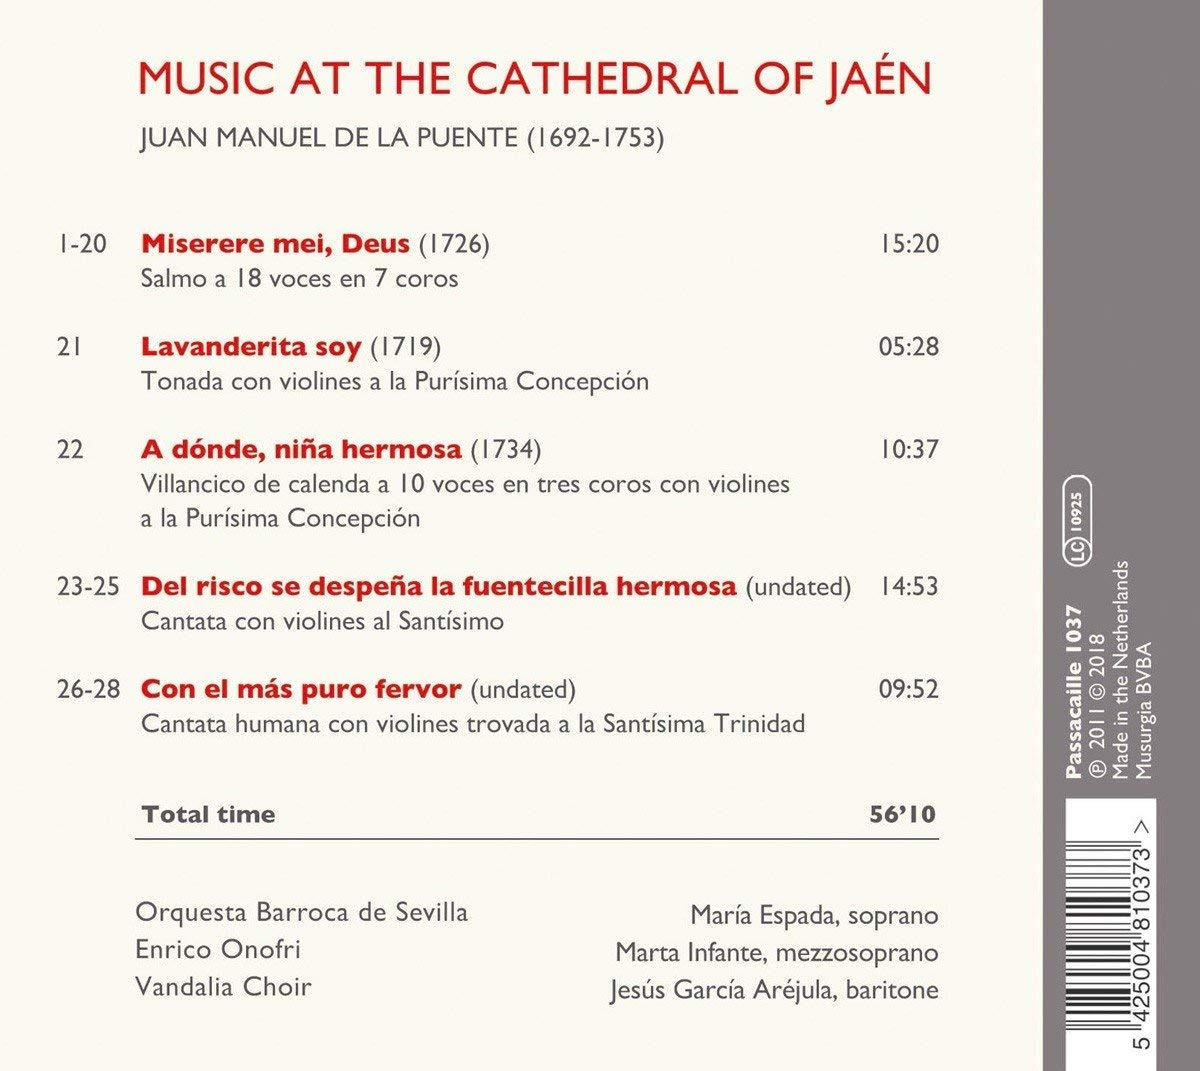 Enrico Onofri 후안 마누엘 델라 푸엔테: 후기 바로크 하엔 대성당의 교회 음악 (Juan Manuel De La Puente: 'Music at the Cathedral of Jaen') 엔리코 오노프리